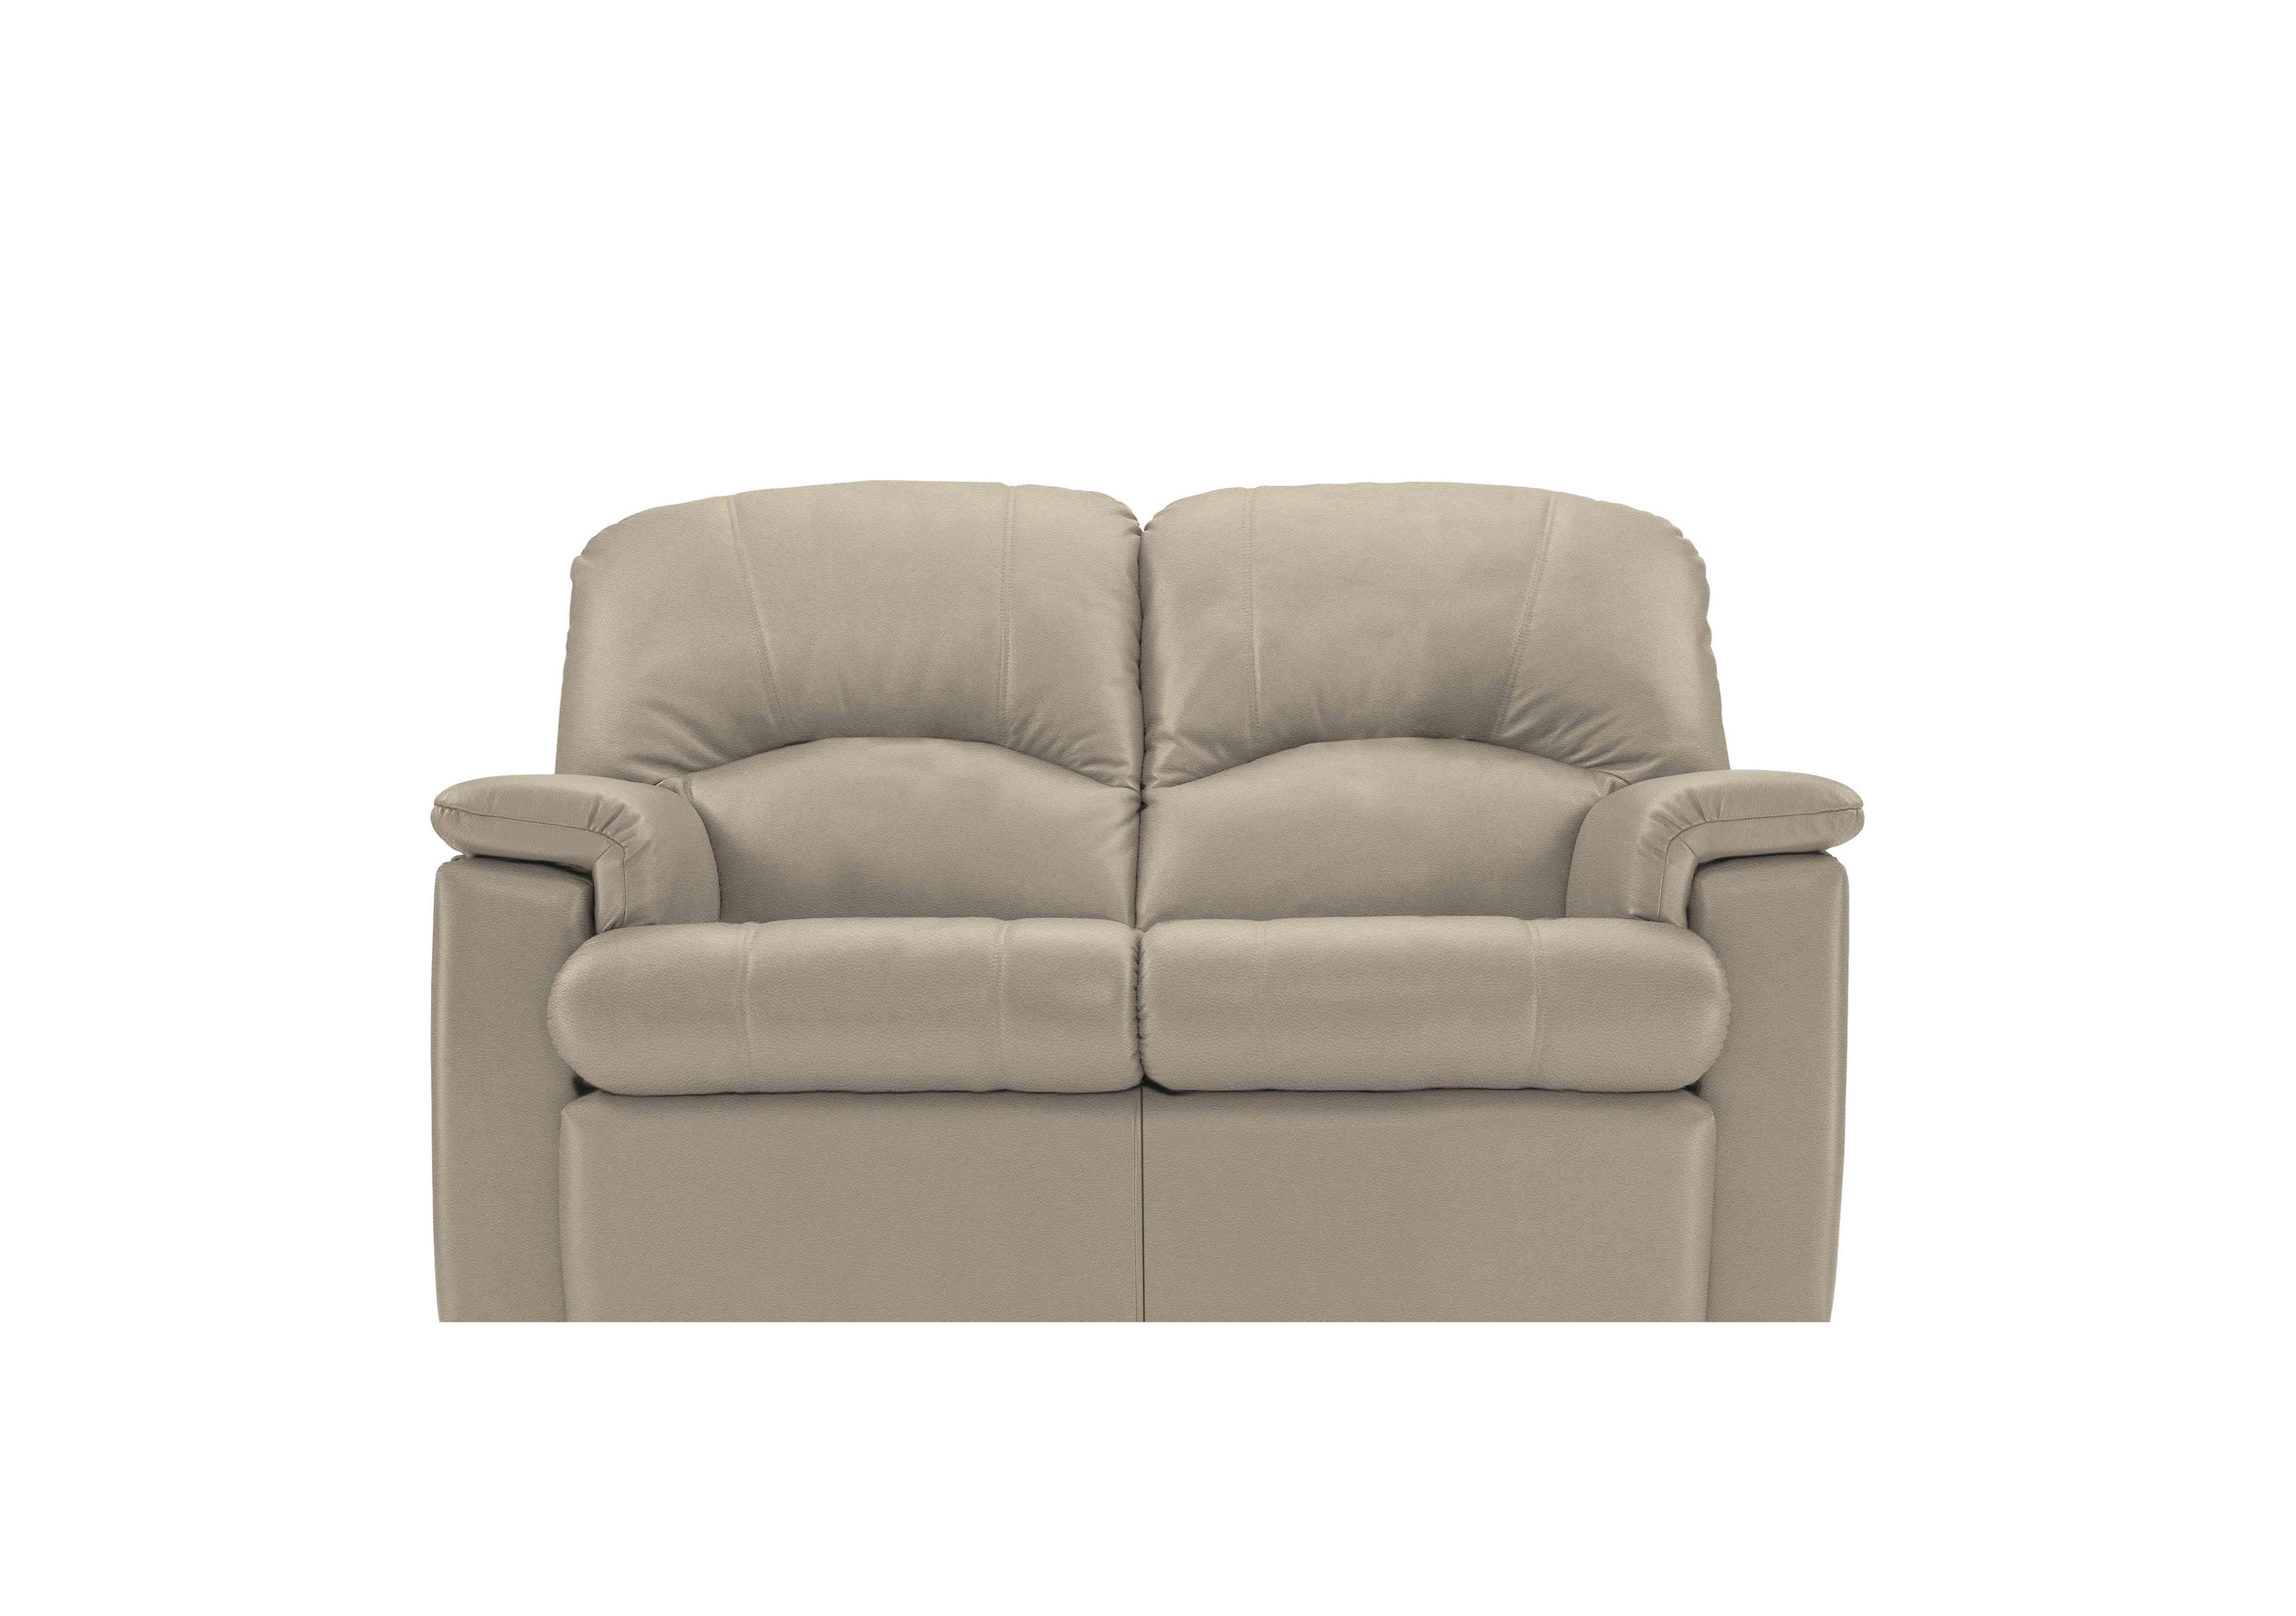 Chloe 2 Seater Leather Sofa in H001 Oxford Mushroom on Furniture Village